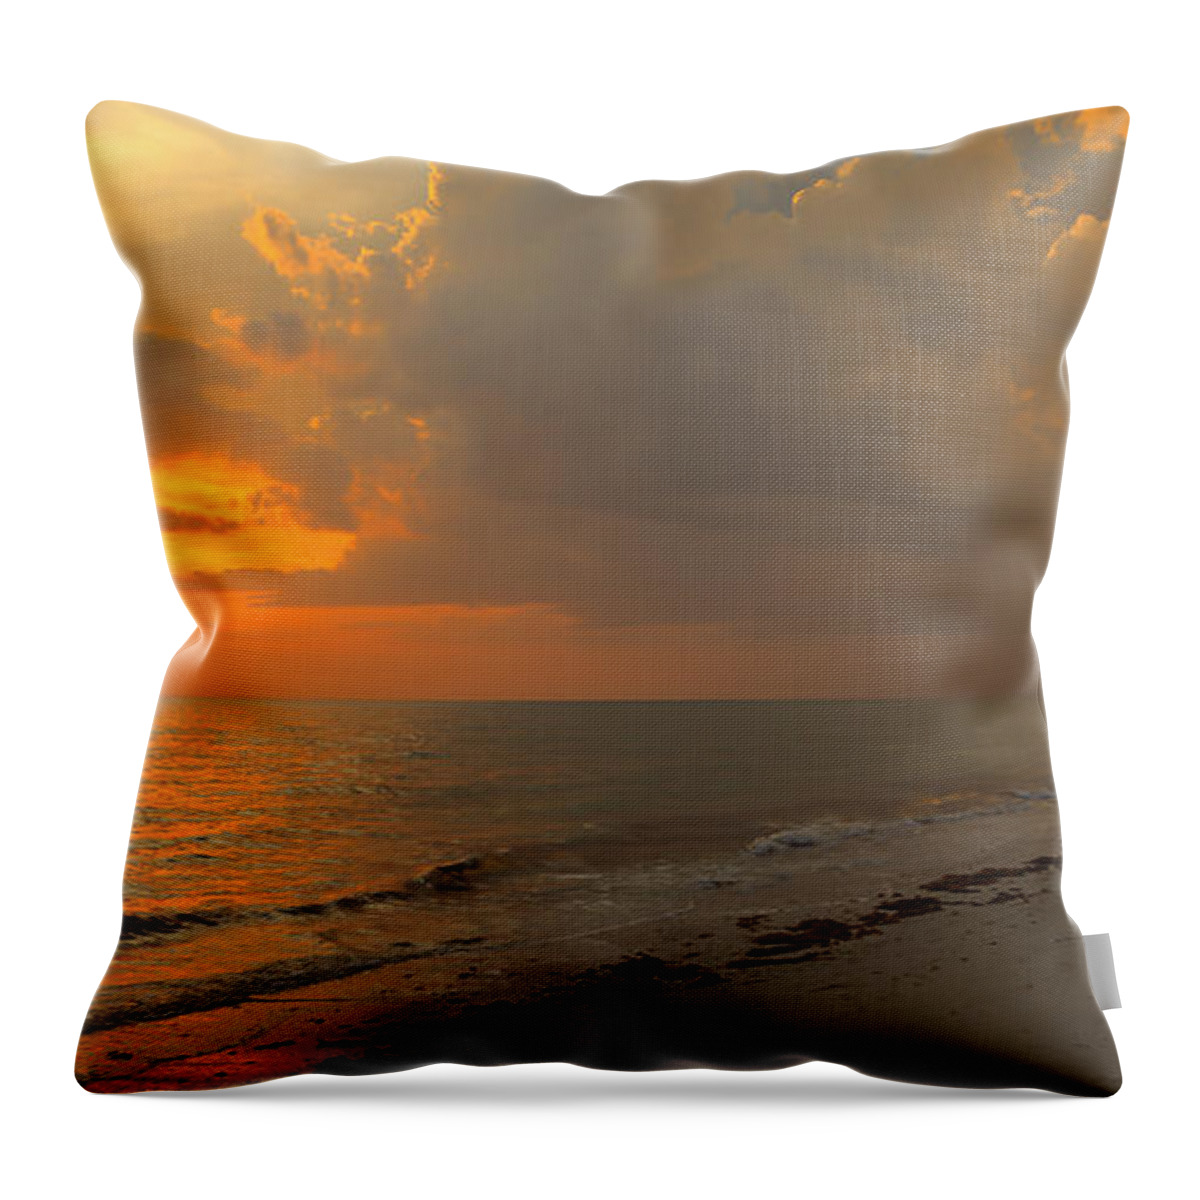 Southwest Throw Pillow featuring the photograph Good Night Sun by Sean Allen